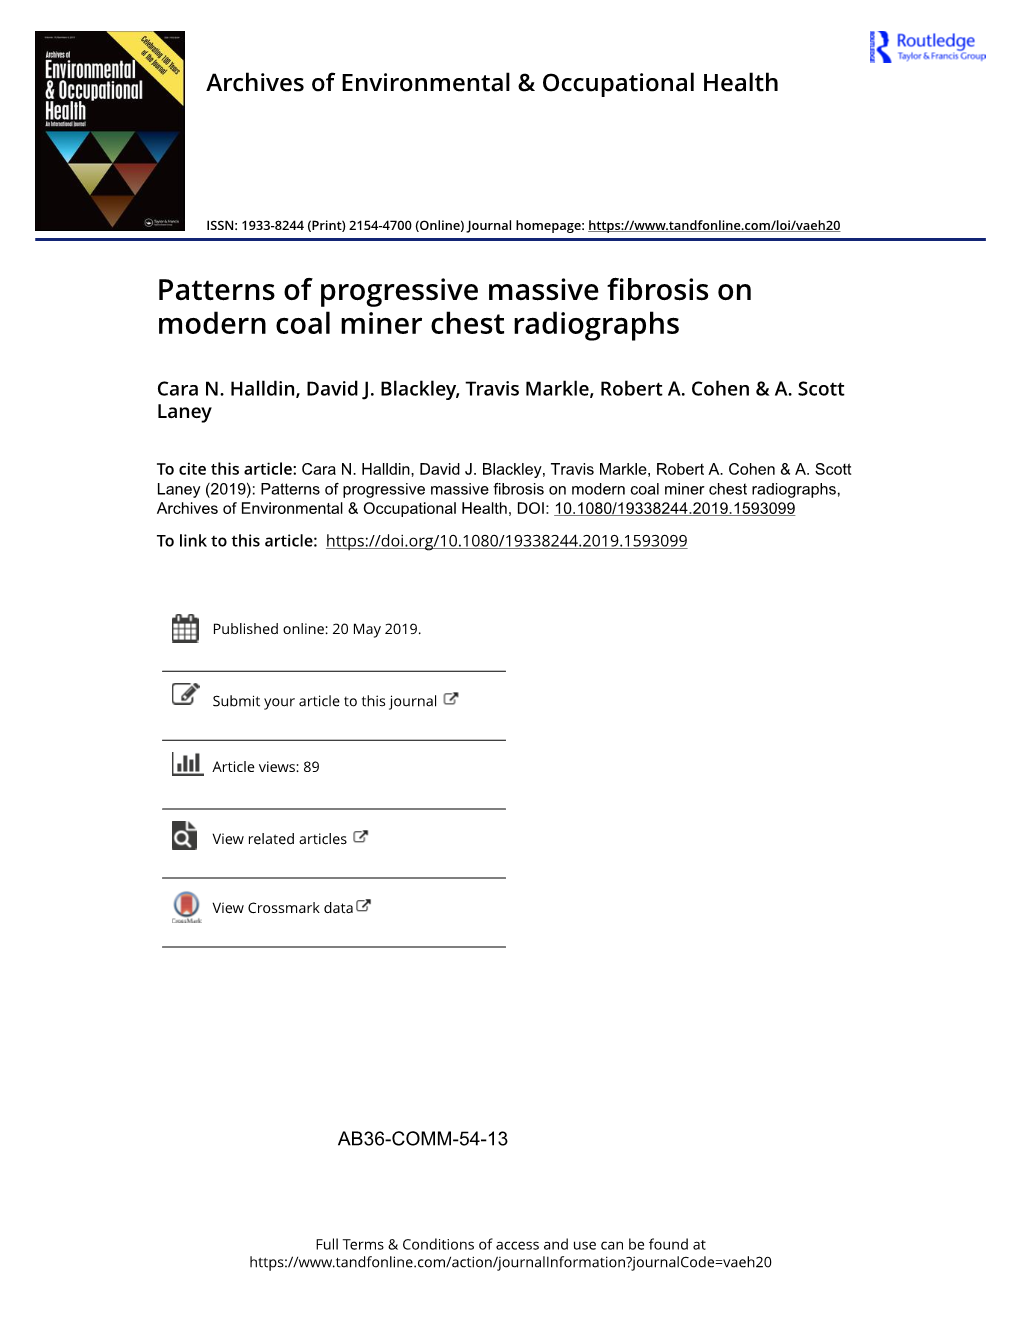 Patterns of Progressive Massive Fibrosis on Modern Coal Miner Chest Radiographs